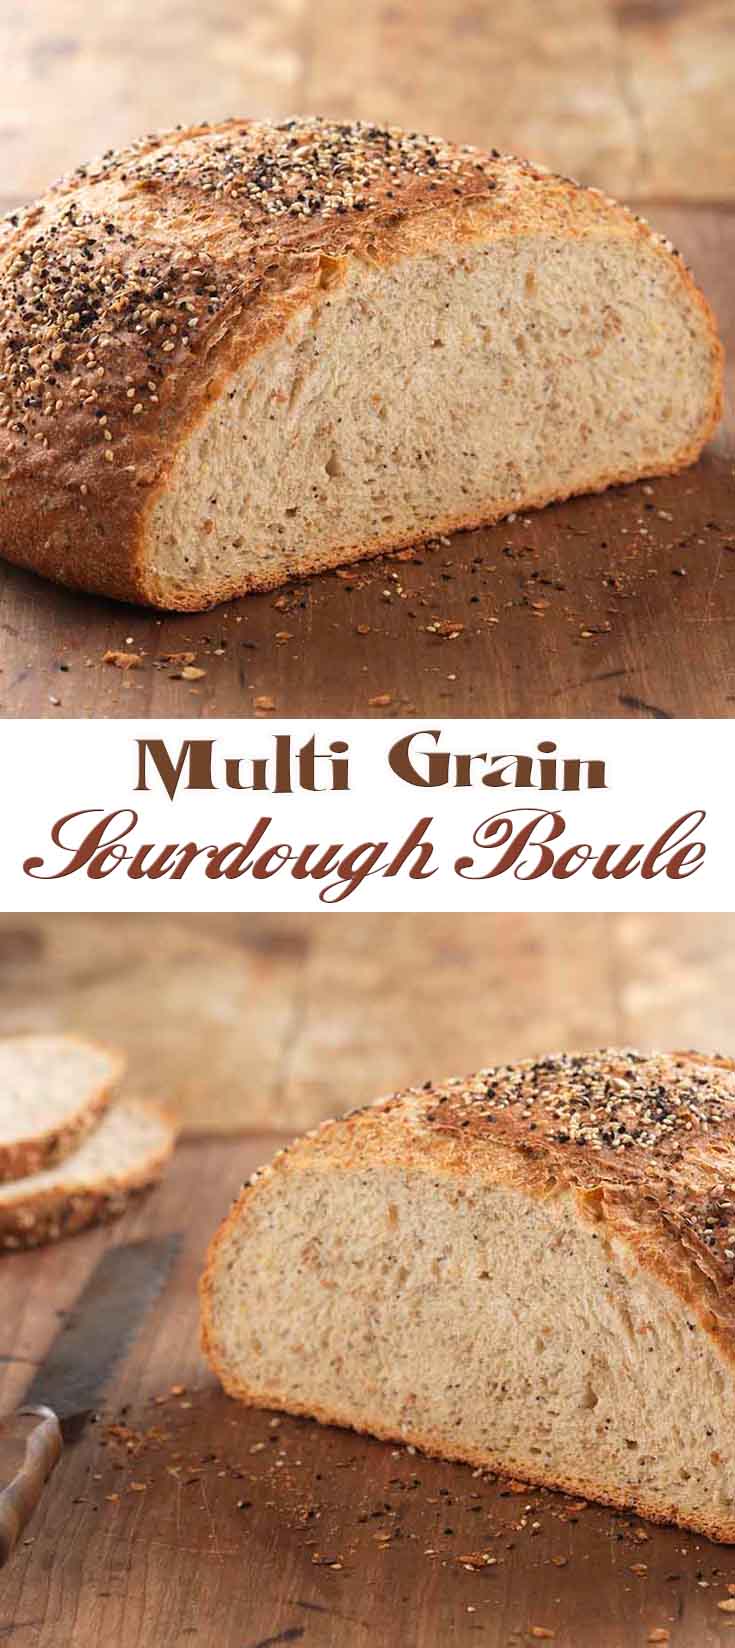 Multi Grain Sourdough Boule